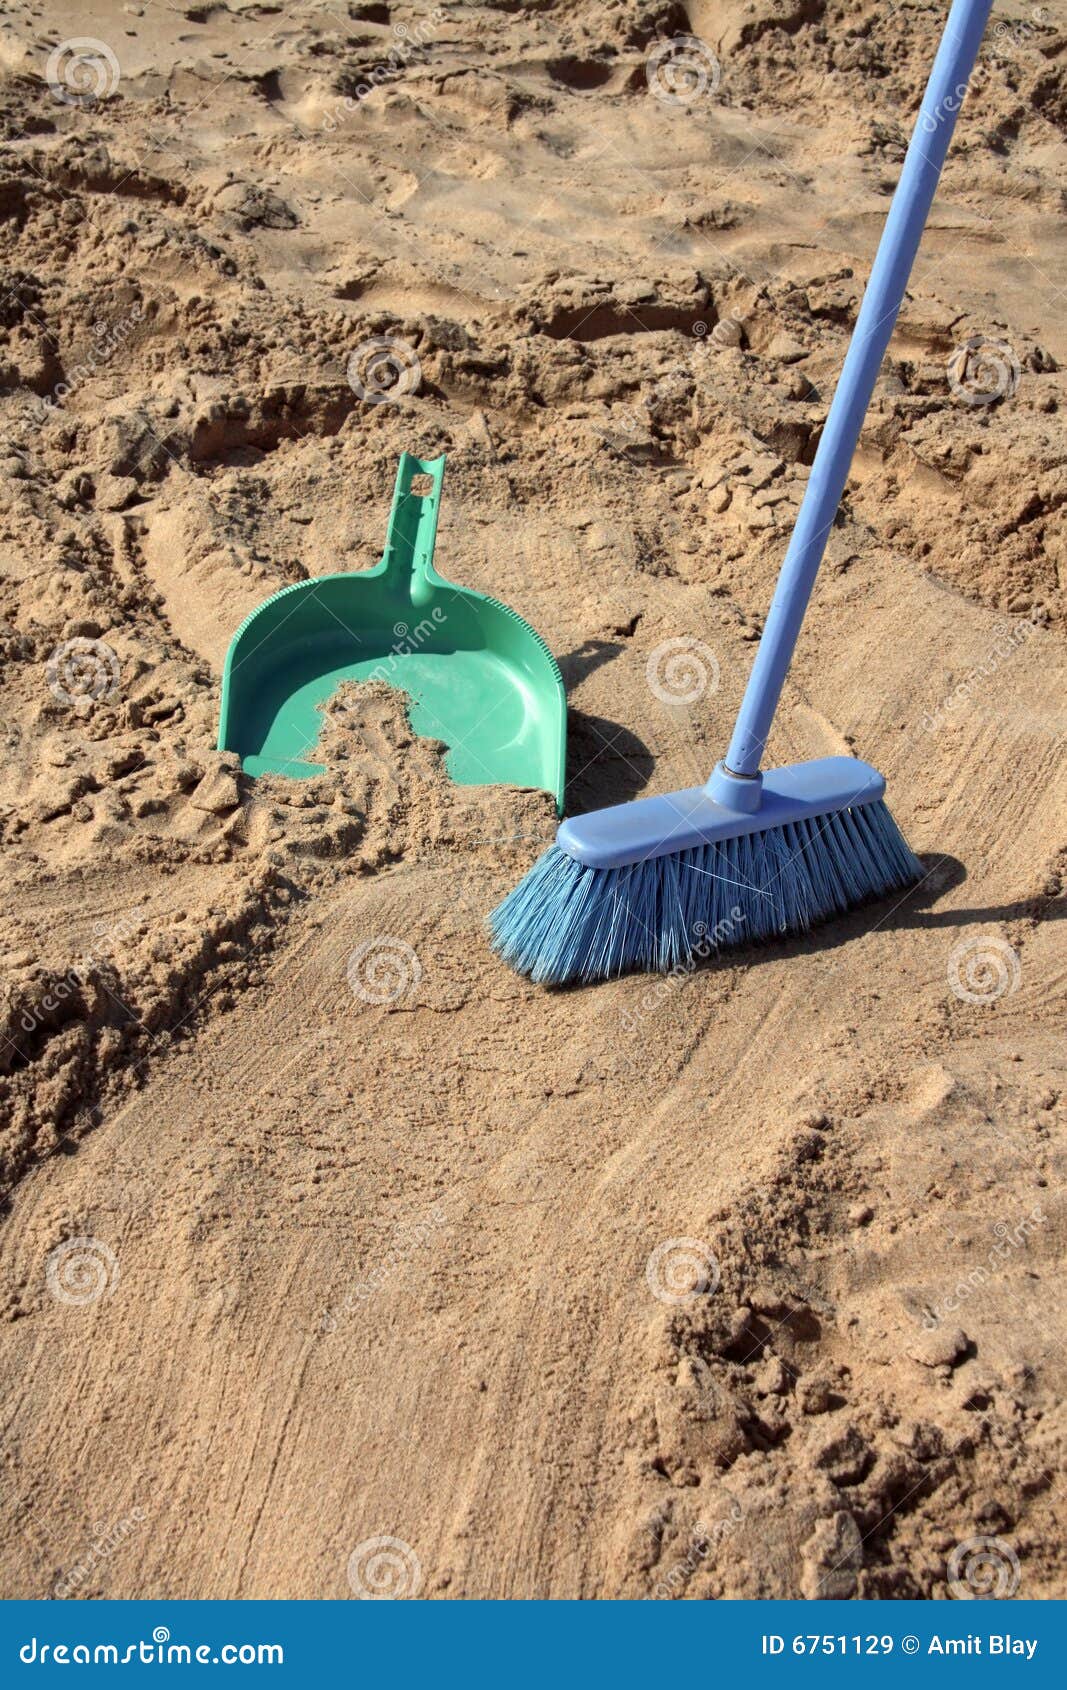 sweeping the beach (irony)